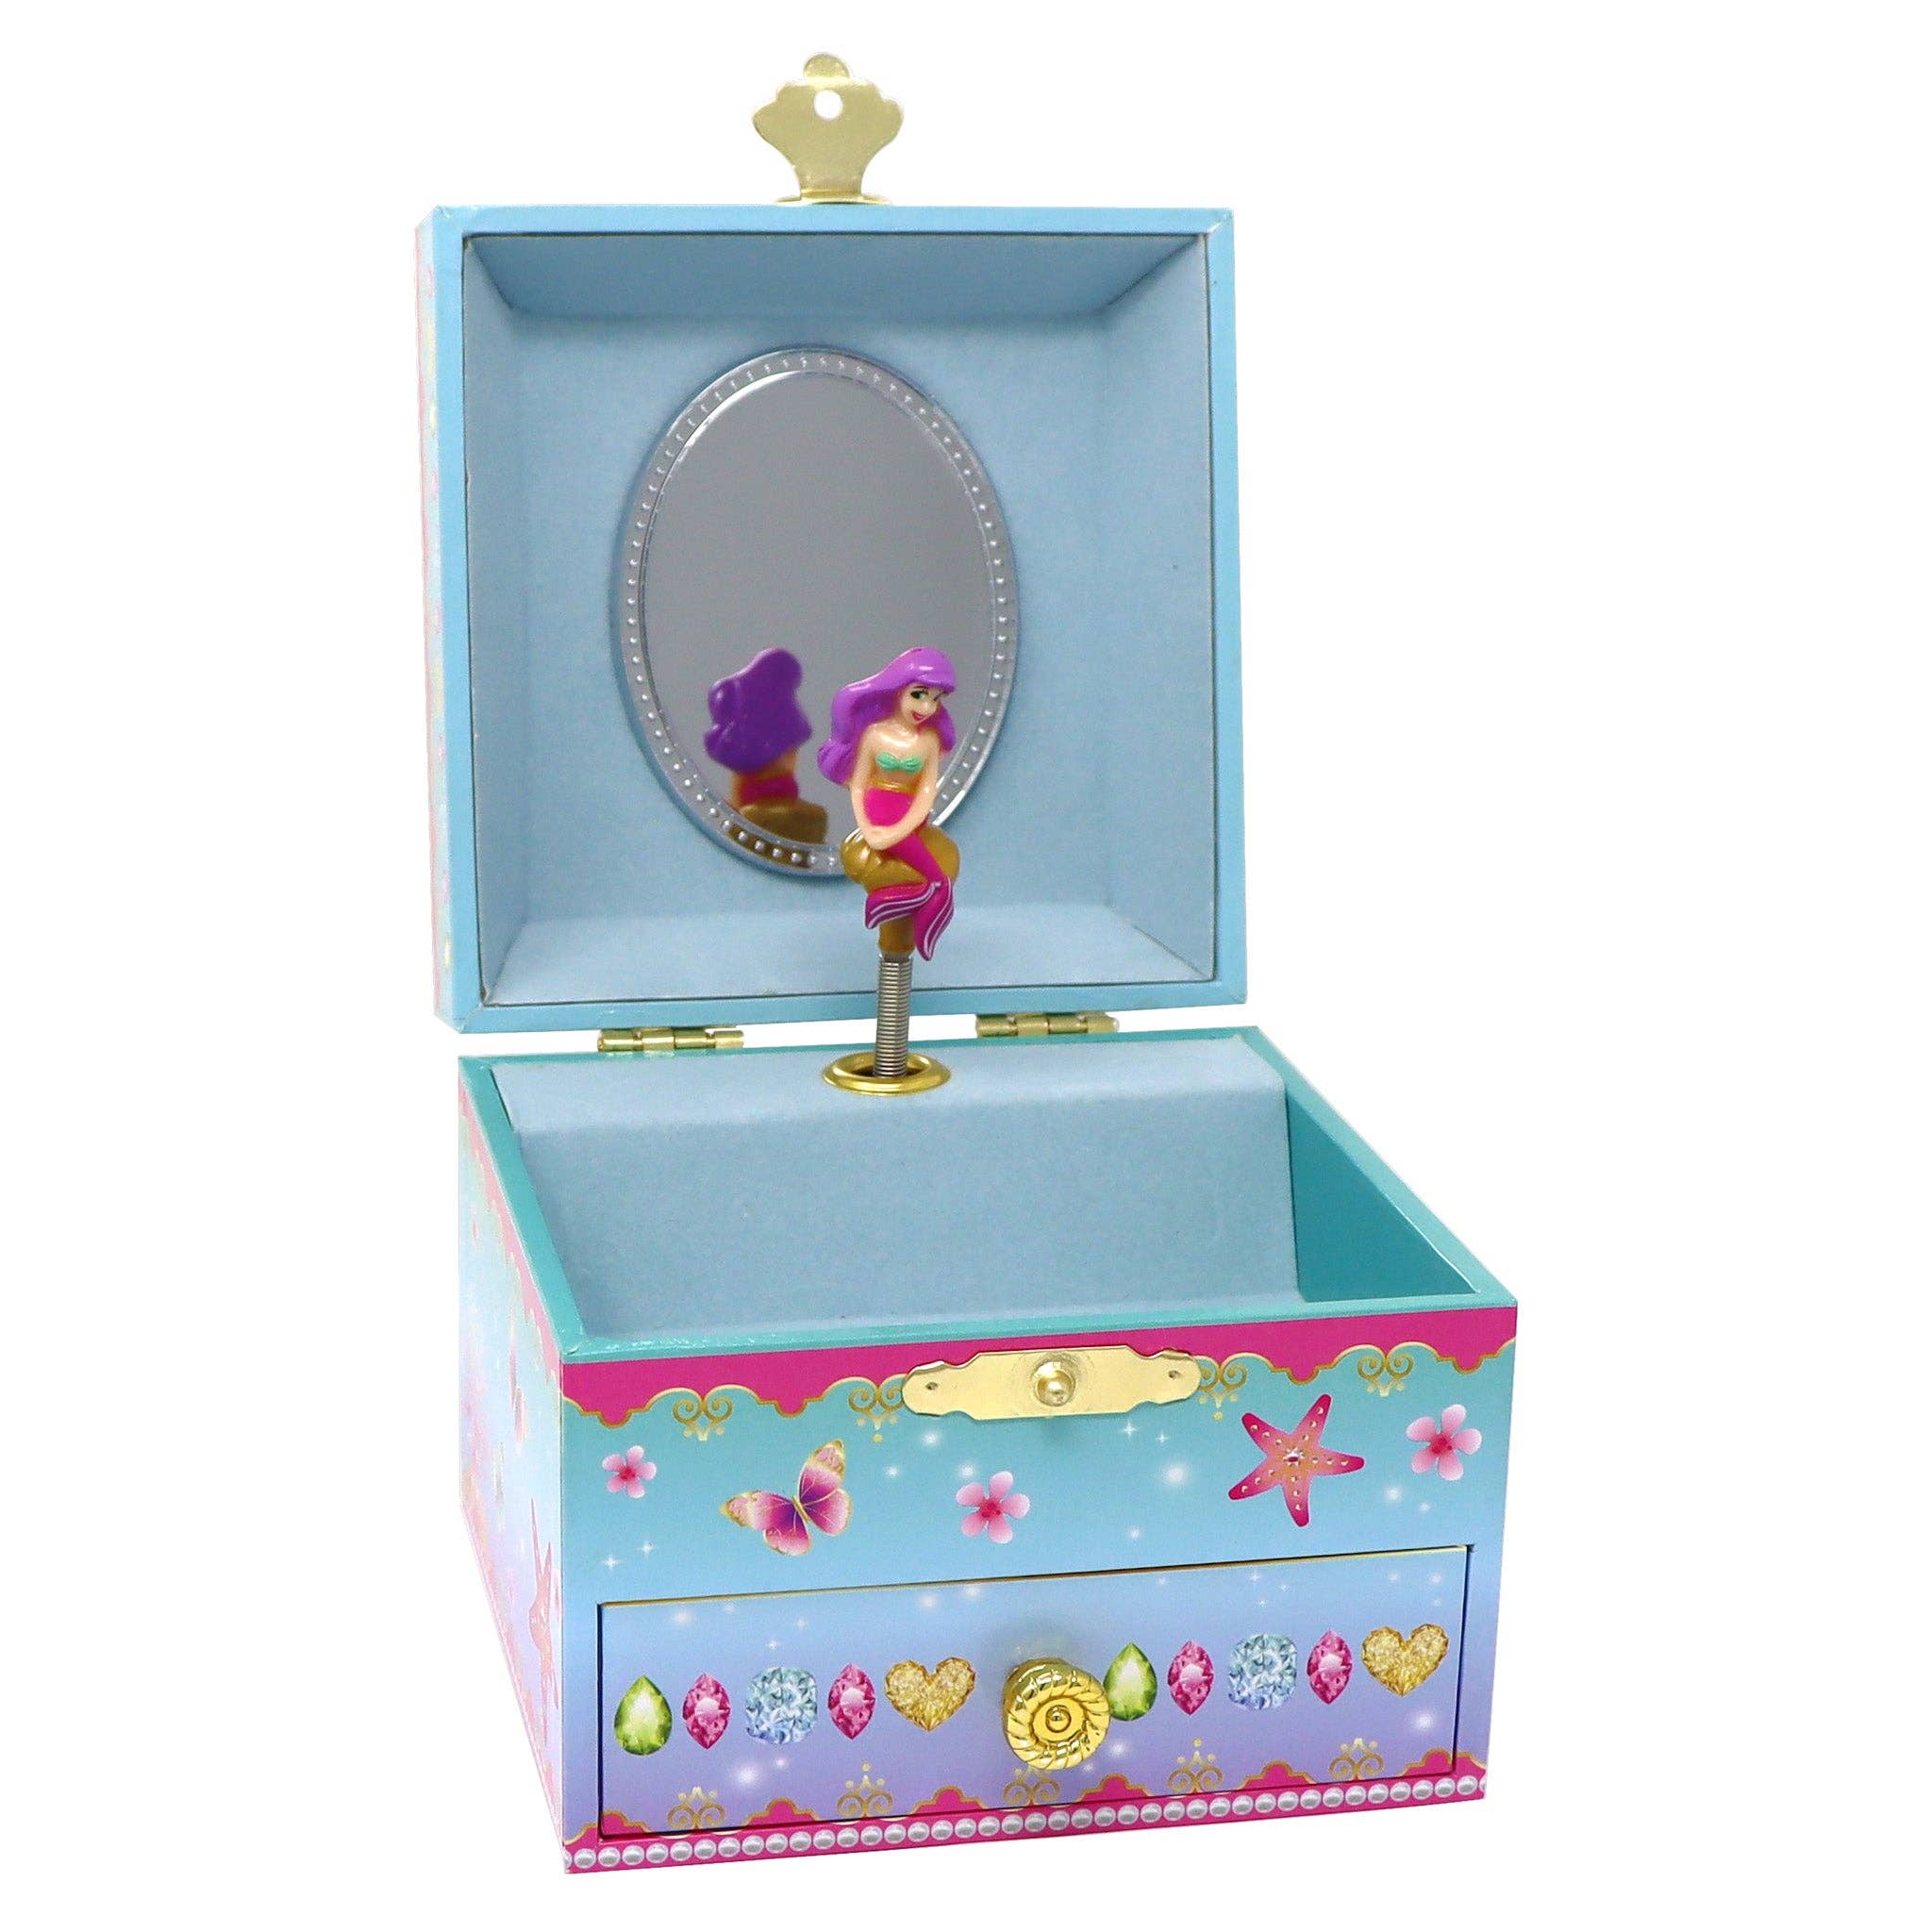 Shimmering Mermaid Small Musical Jewlery Box